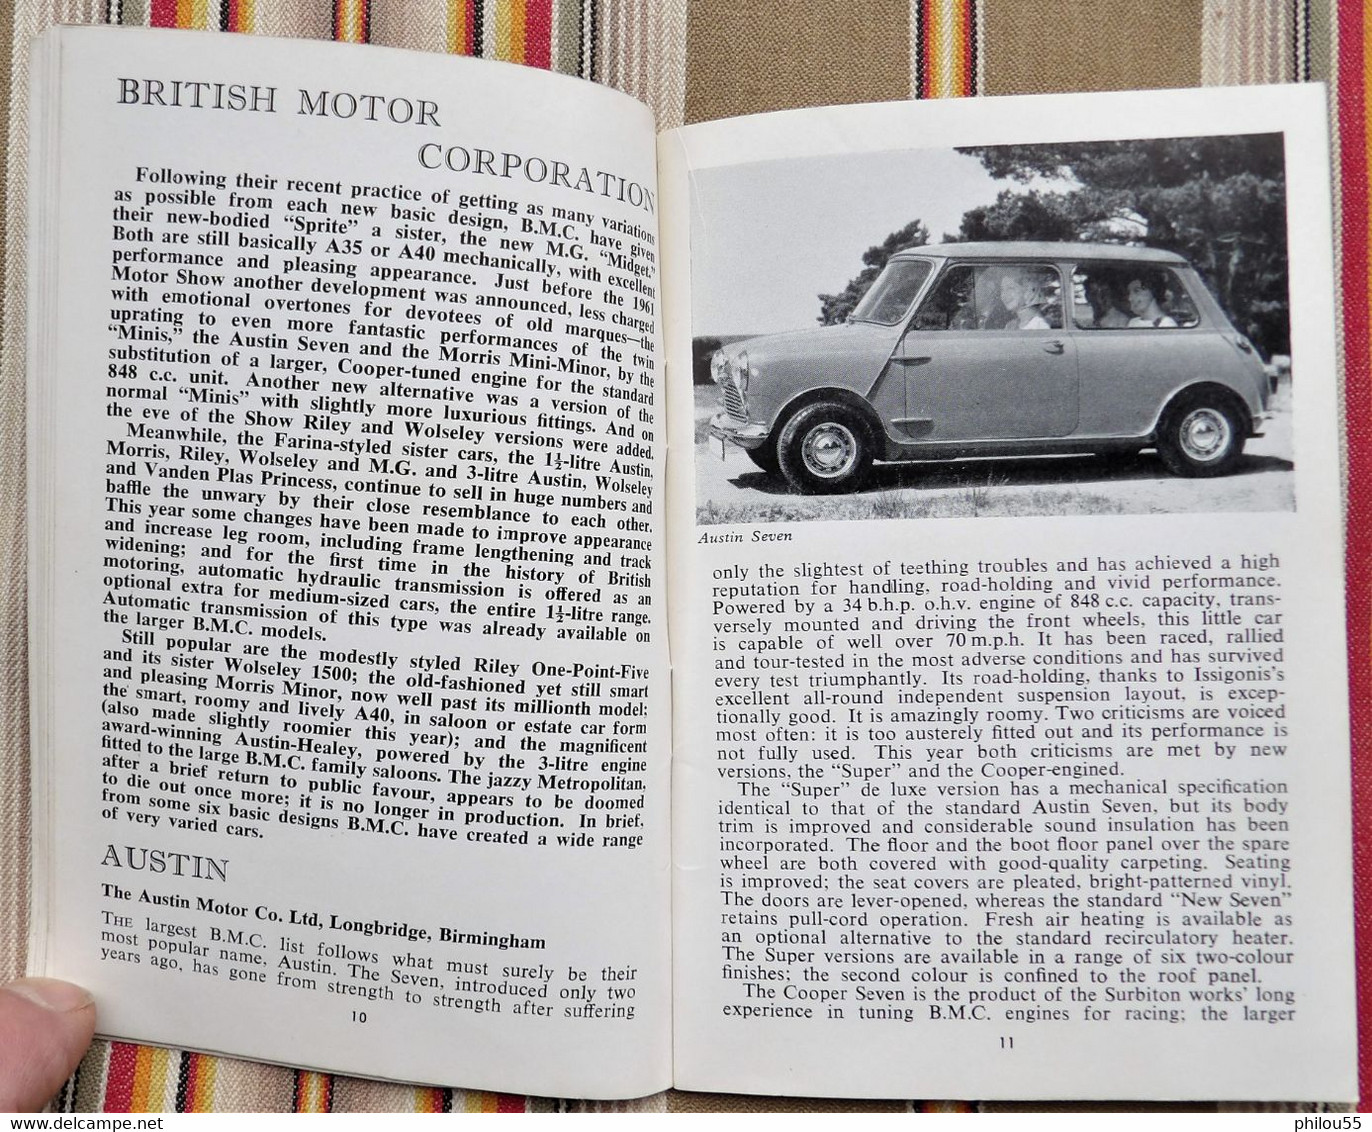 Livret abc Dan Allan BRITISH CARS 1962